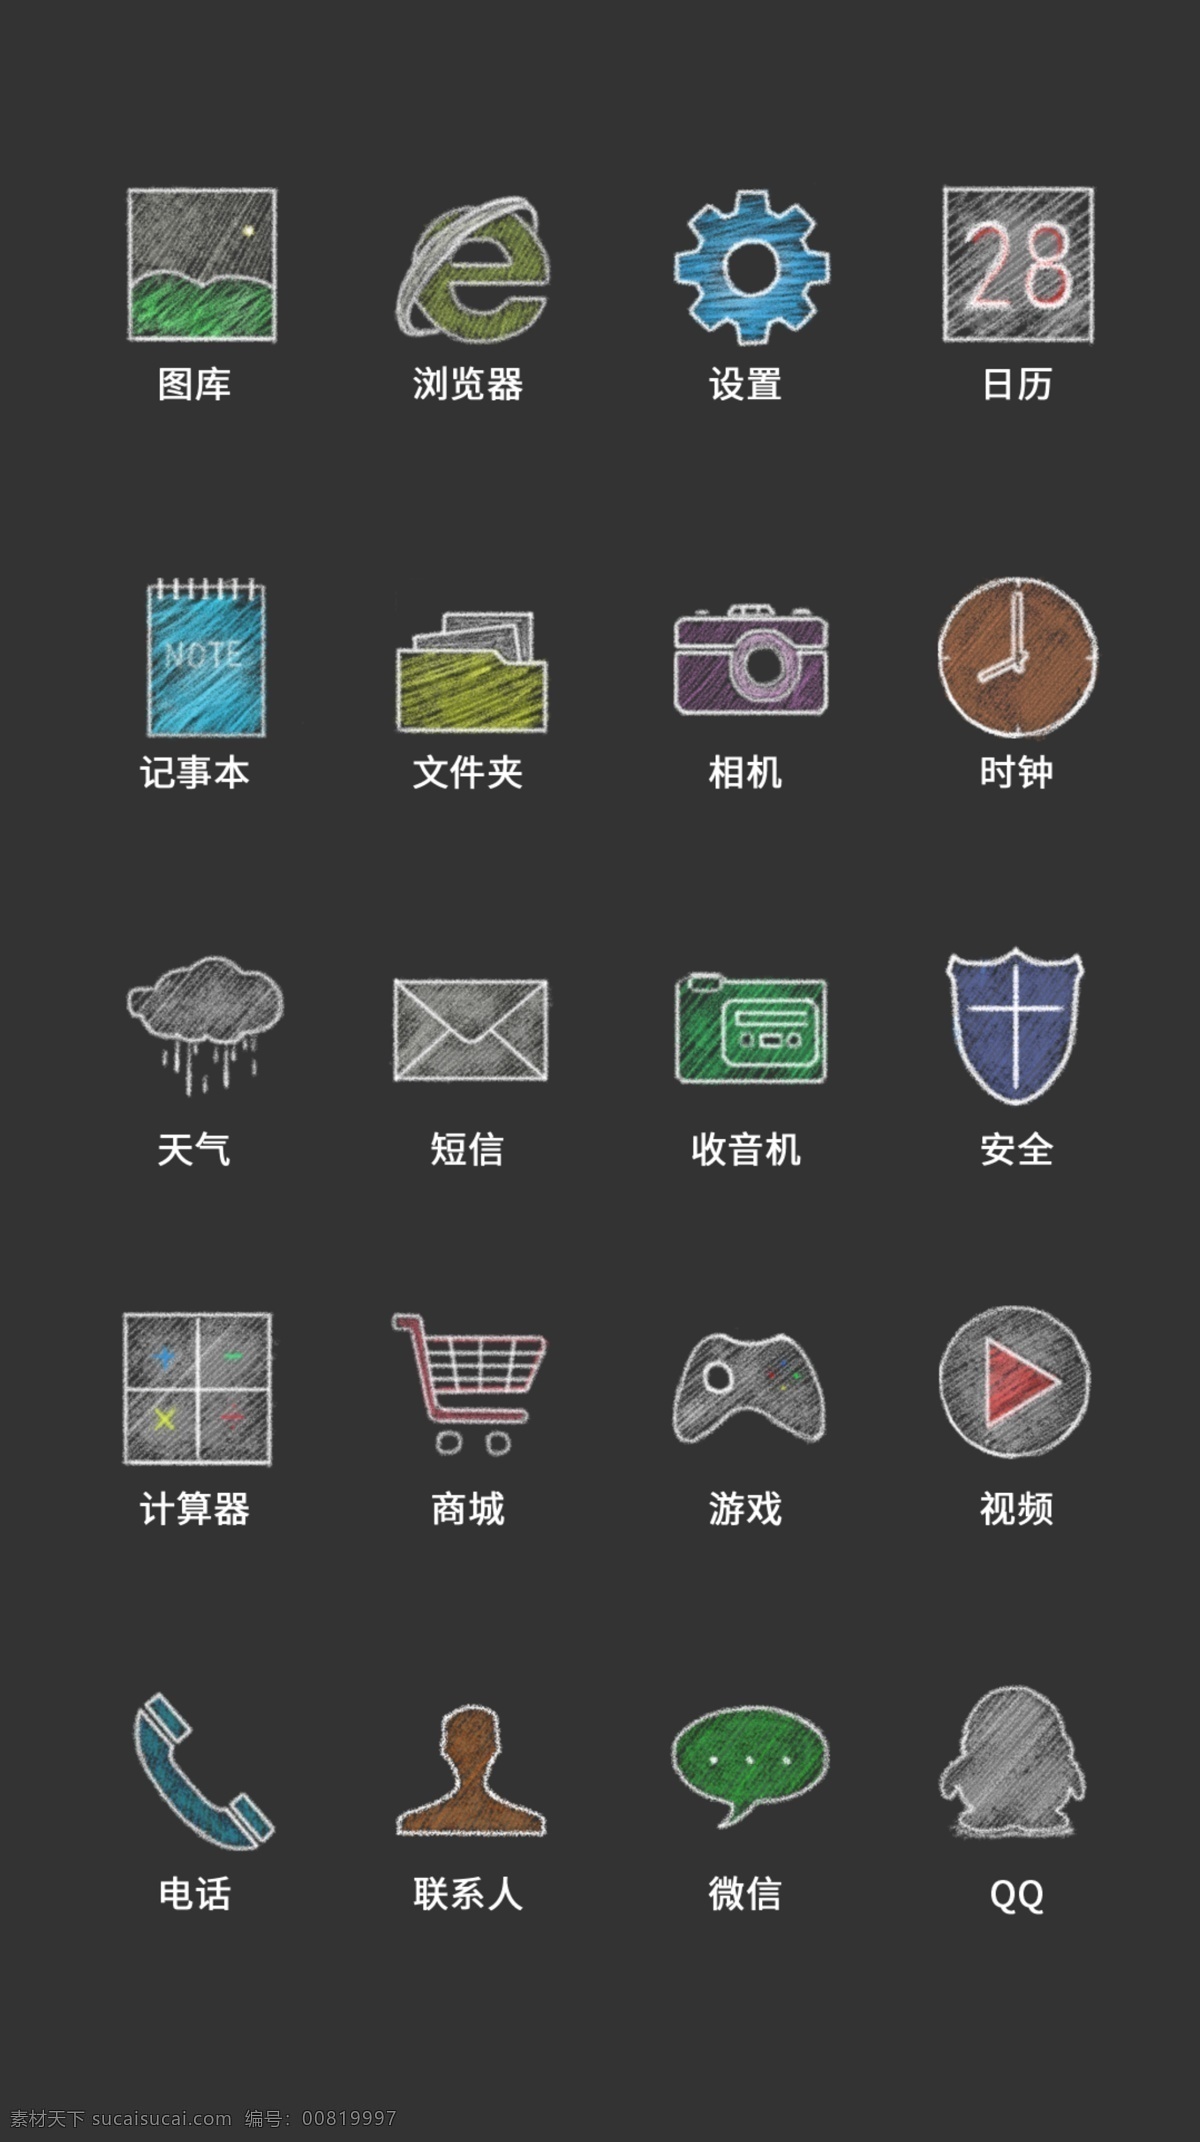 ui 手机 应用 icon 图标 简约icon 时尚图标 手机icon ui设计 icon设计 手机图标 手机应用 应用图标 图标设计 功能icon 功能性图标